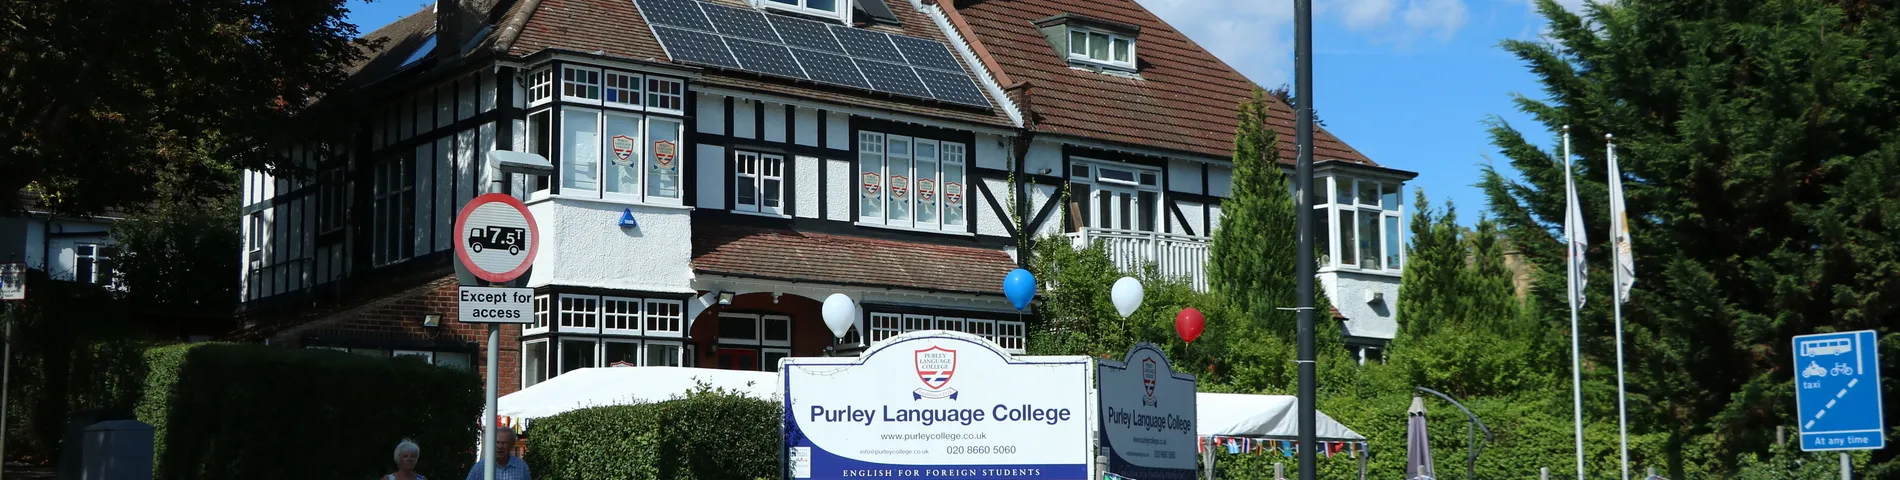 Purley Language College foto 1